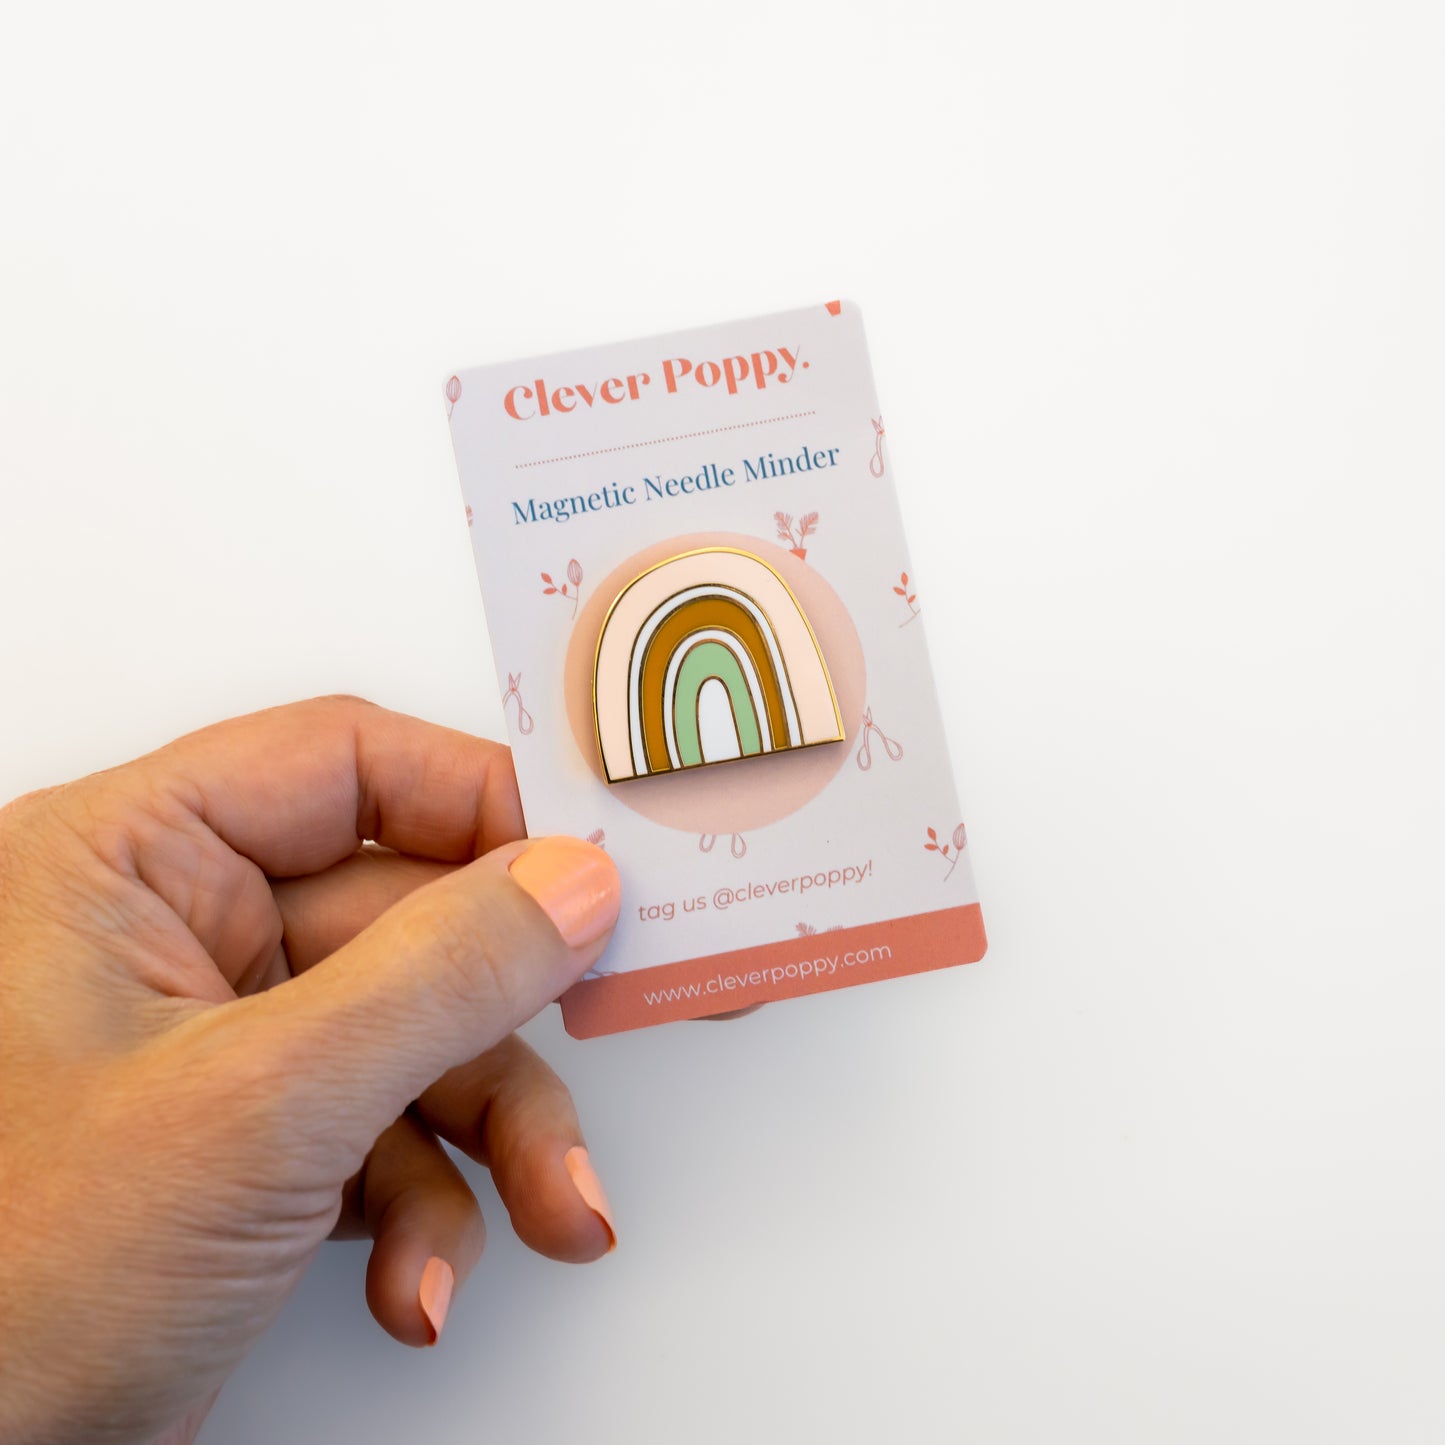 Rainbow Magnetic Needle Minder - Clever Poppy